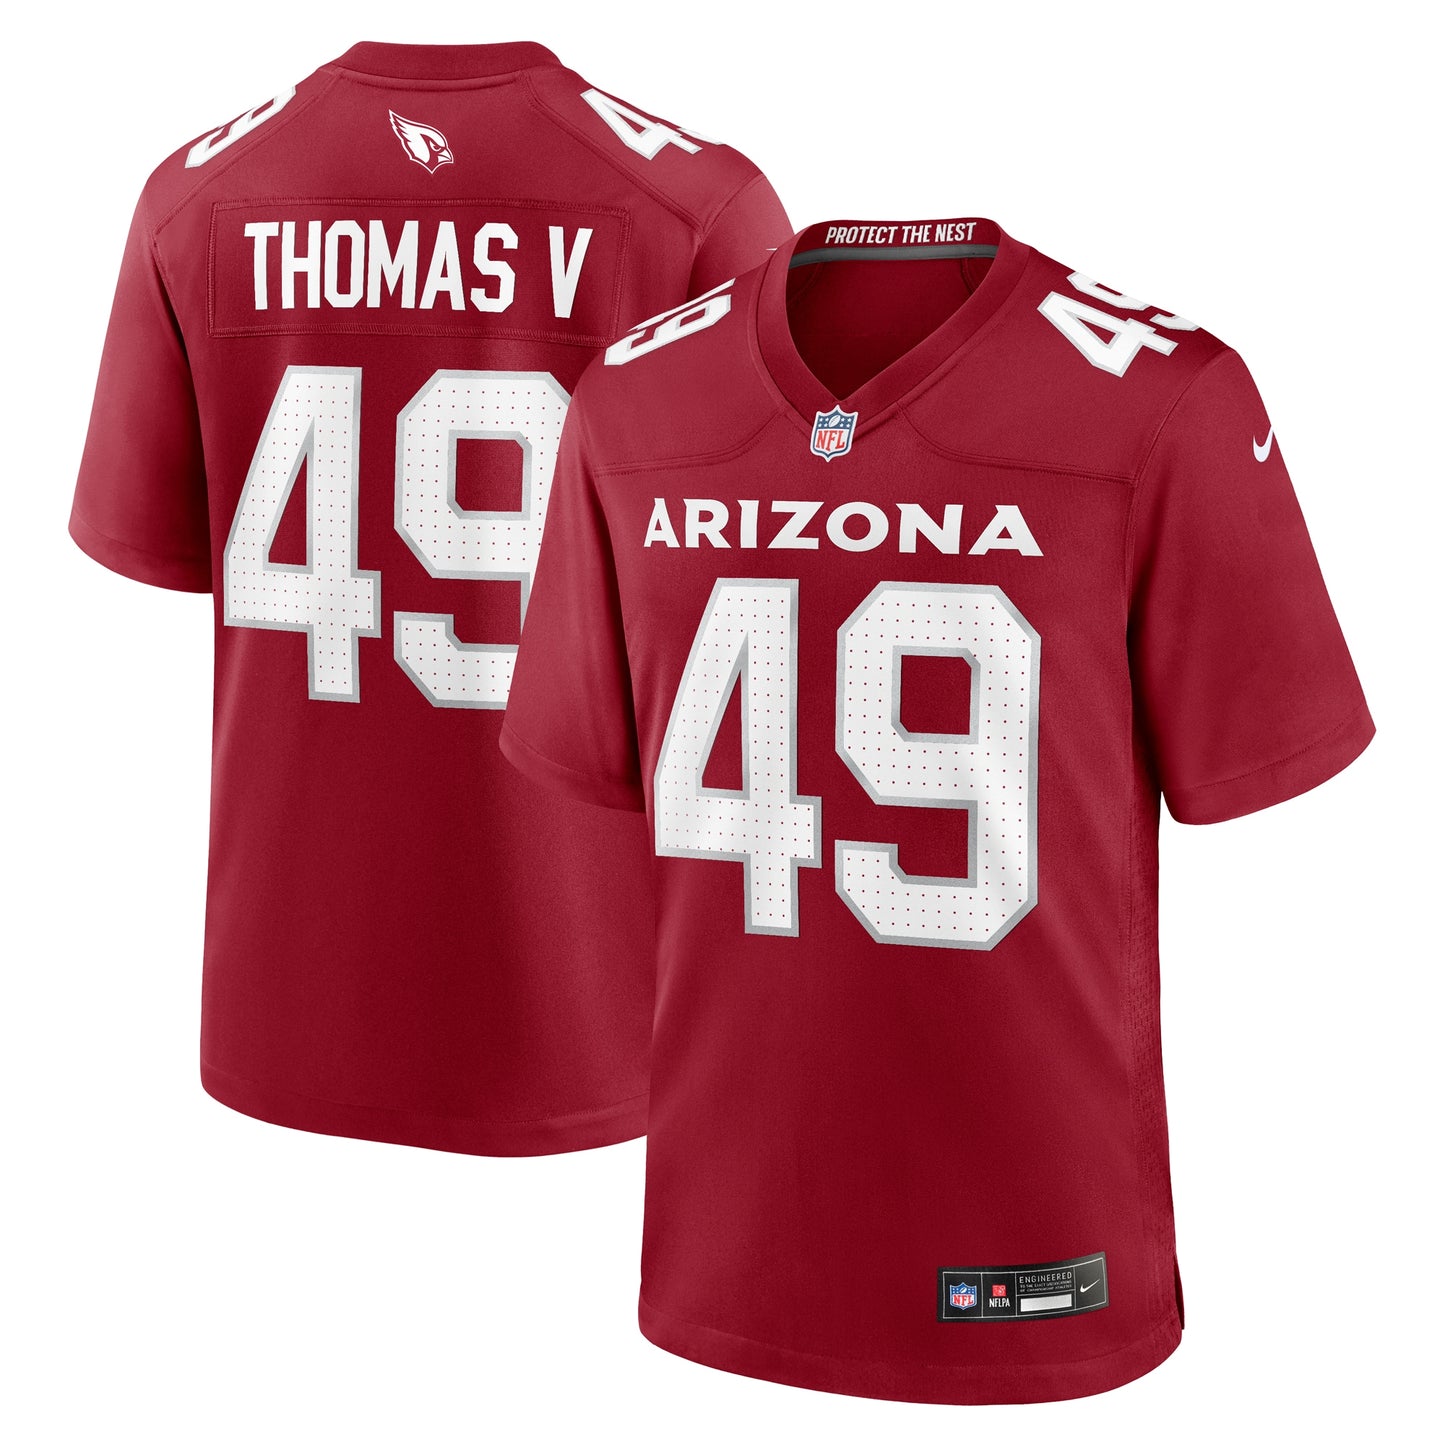 Starling Thomas V Arizona Cardinals Nike Team Game Jersey - Cardinal